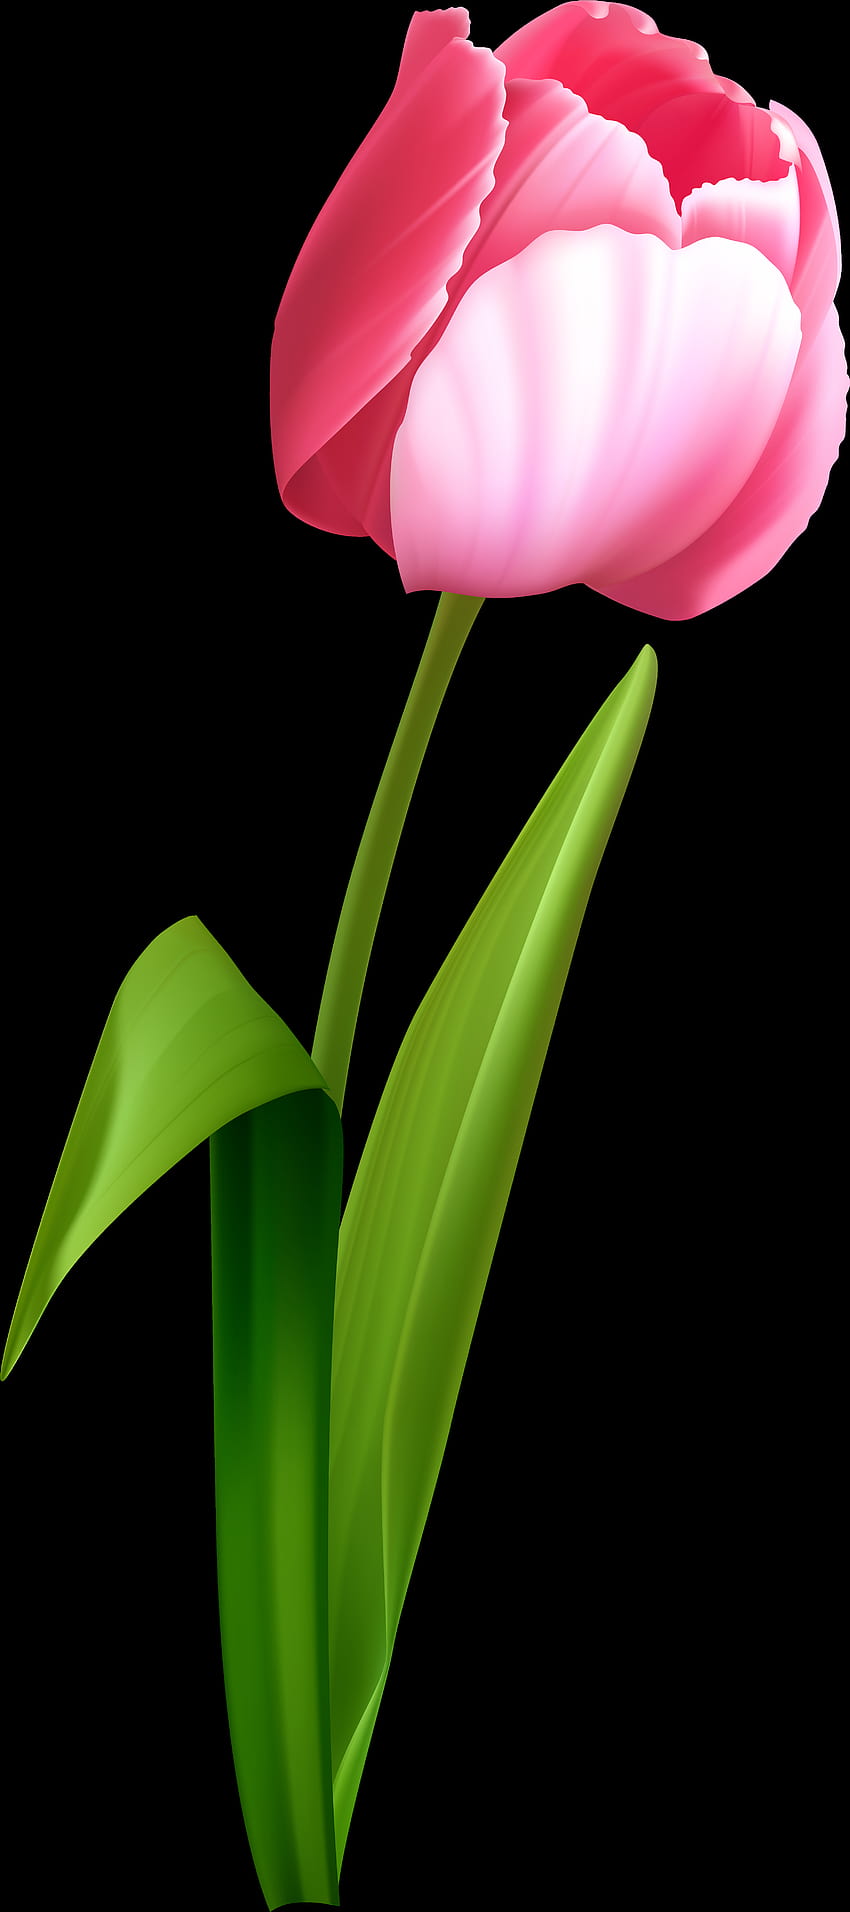 Gráficos de red portátiles de tulipán Transparencia de prediseñadas, arte de tulipán de primavera fondo de pantalla del teléfono